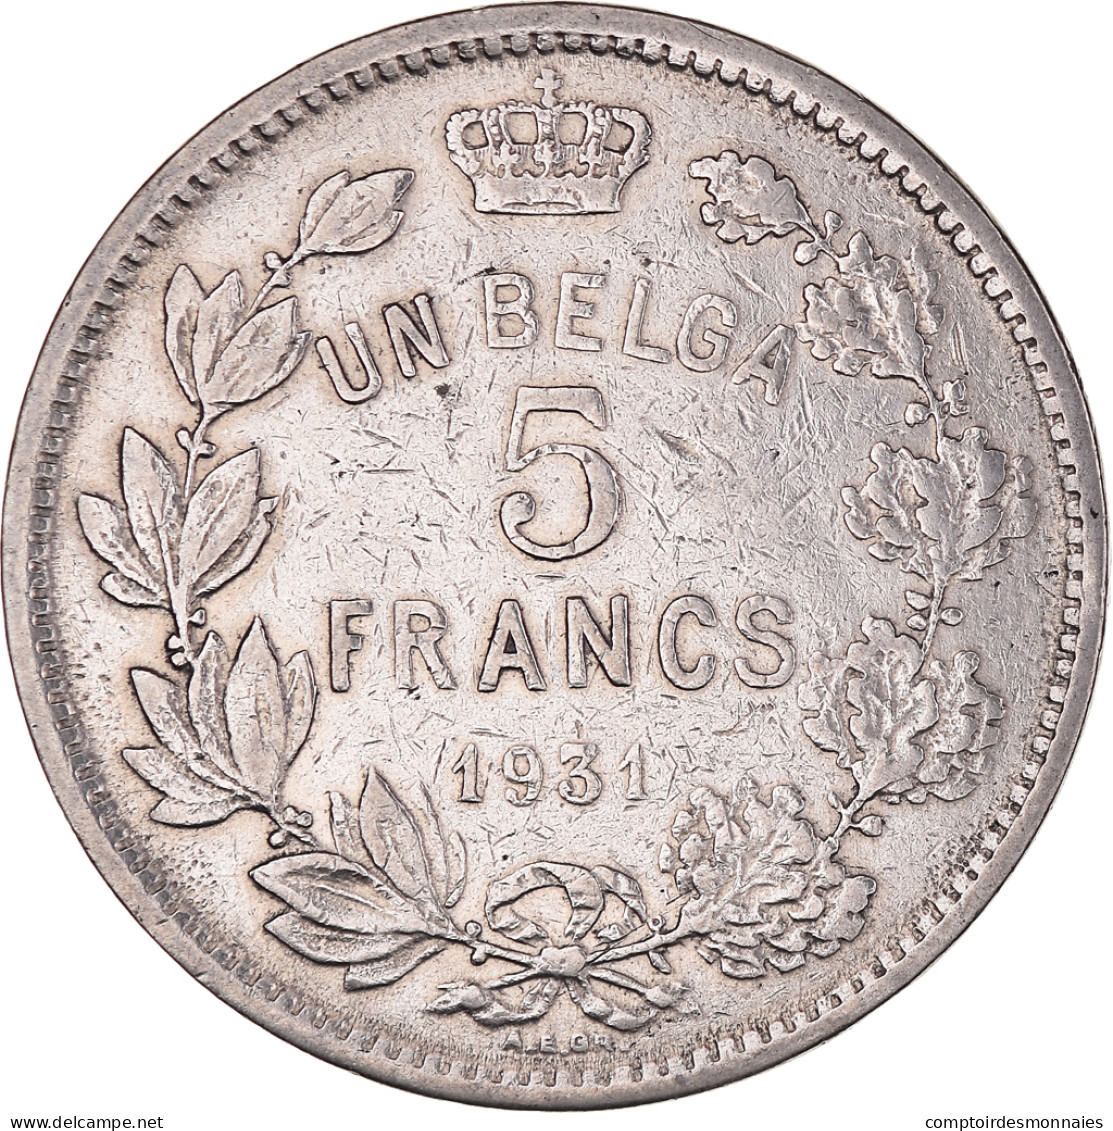 Monnaie, Belgique, Albert I, 5 Francs, 5 Frank, 1931, Position A, TTB, Nickel - 5 Frank & 1 Belga